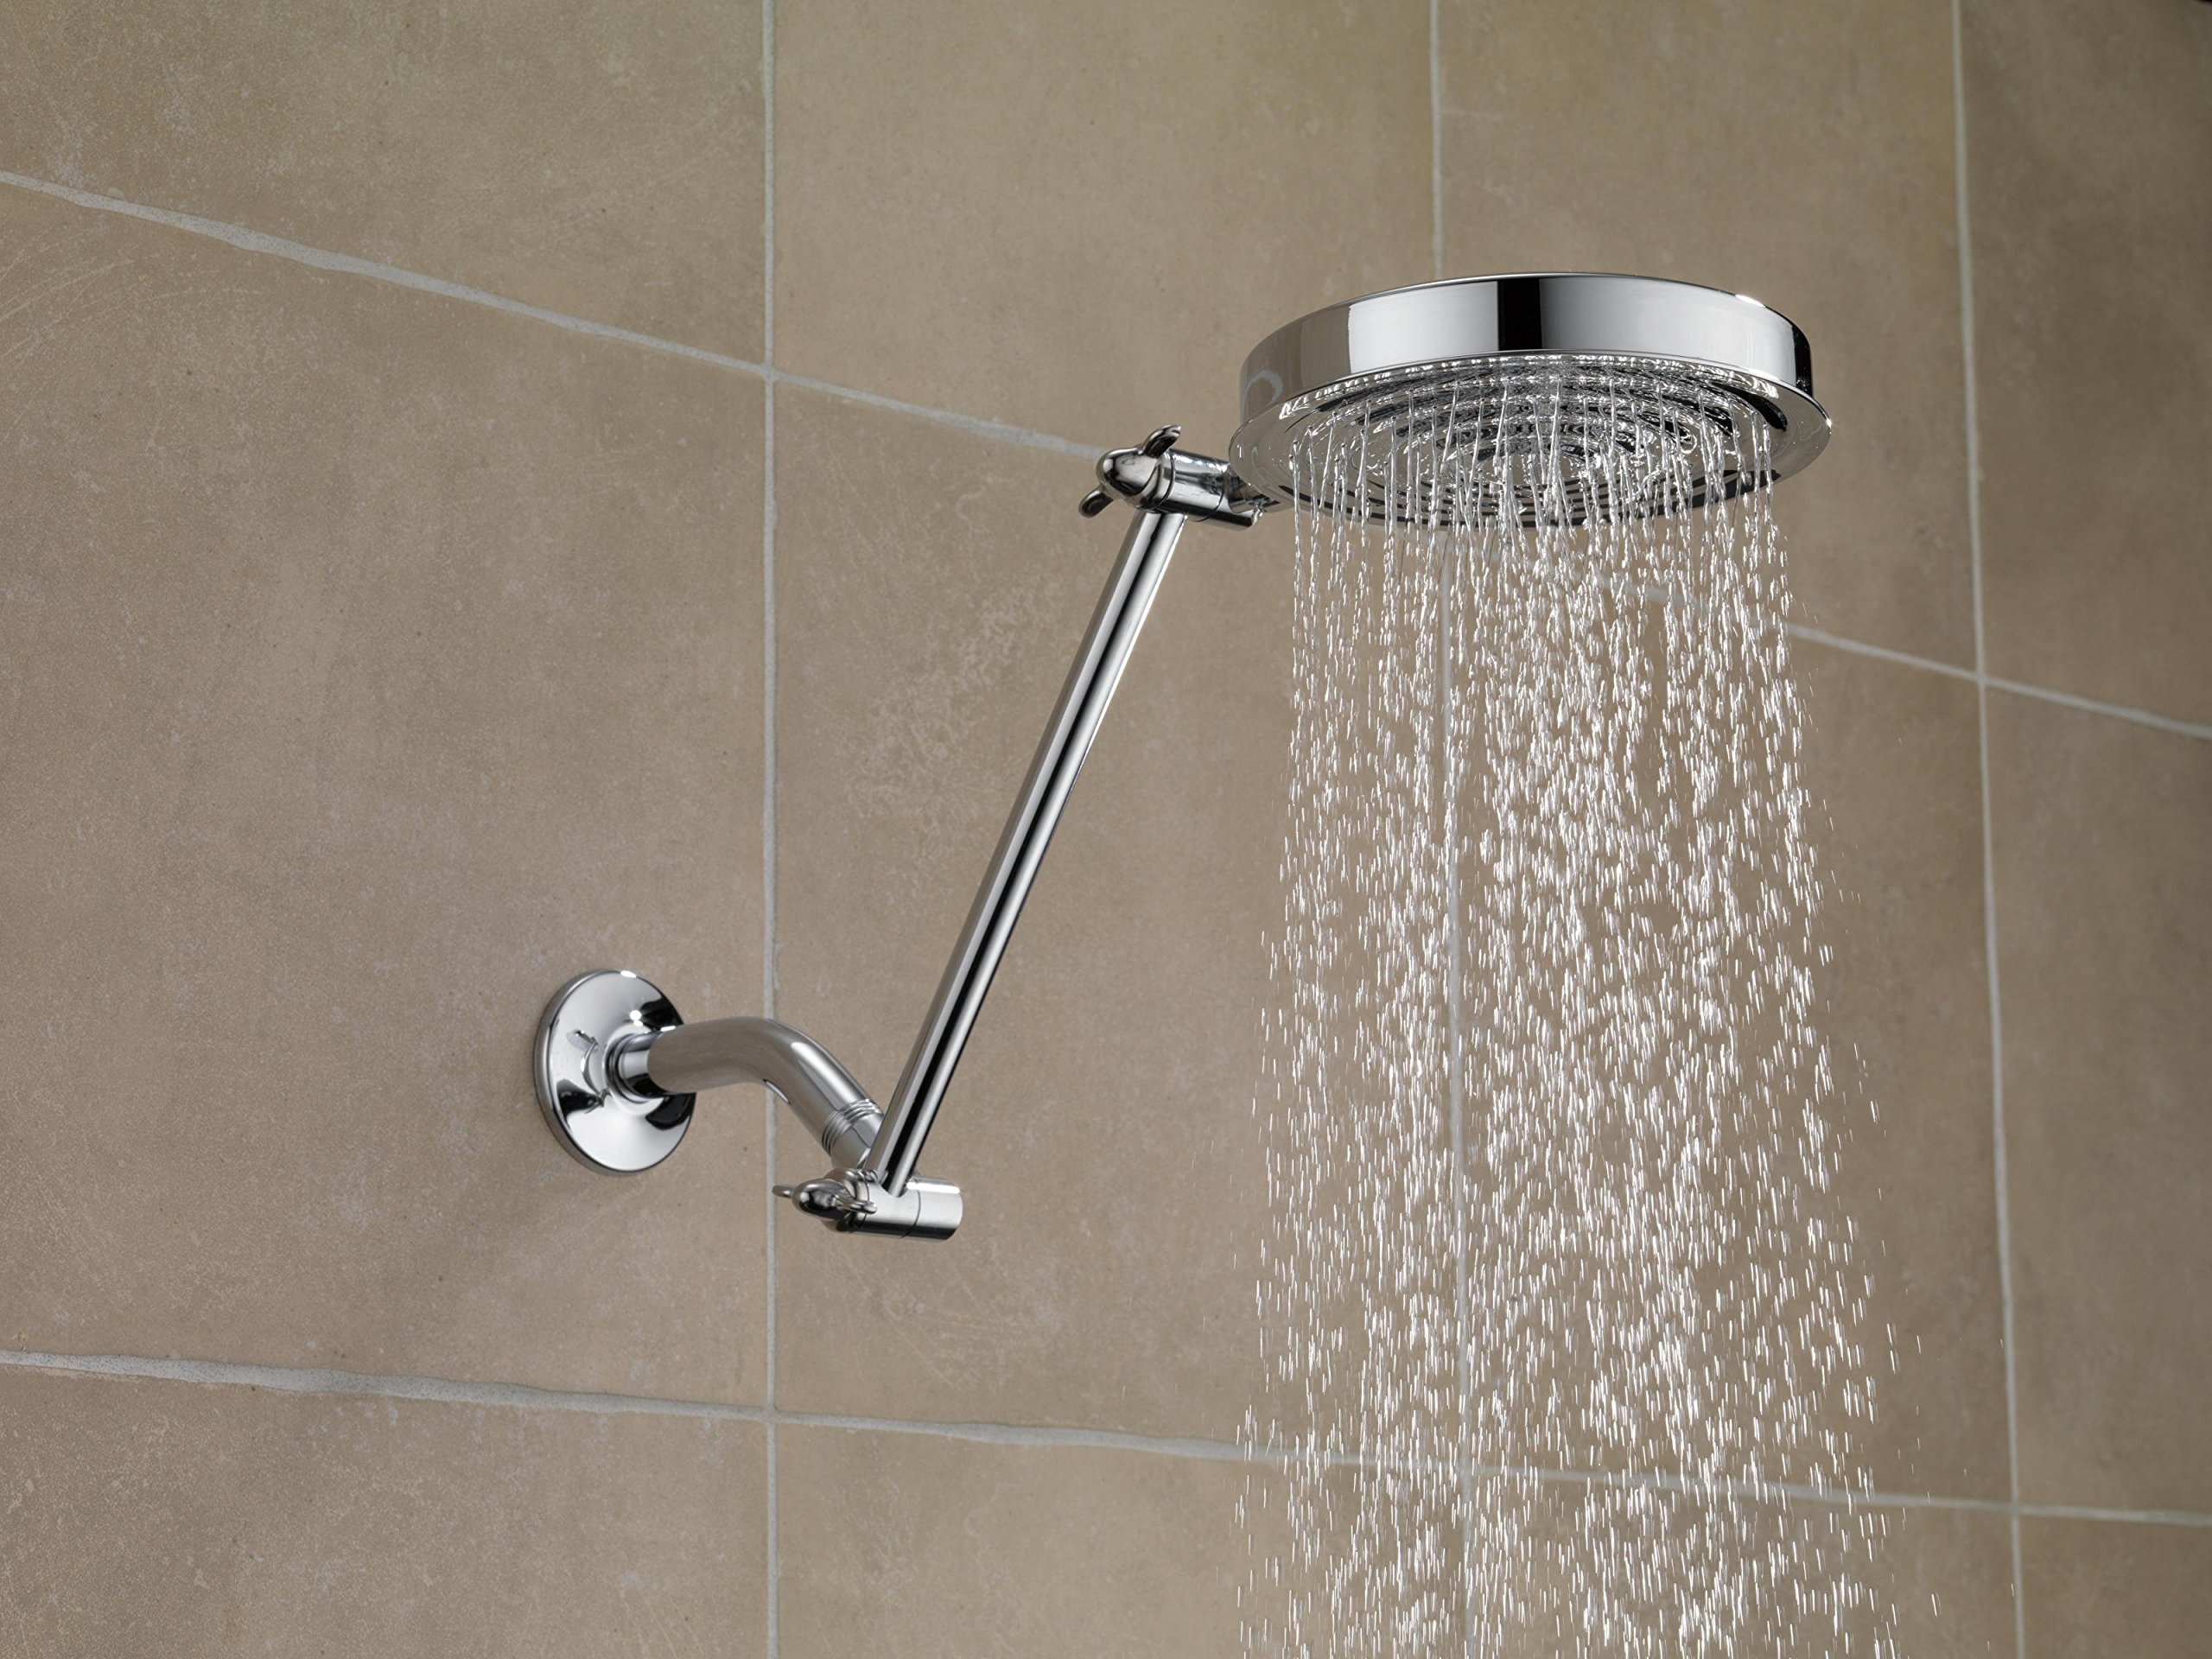 Delta Faucet 10-inch Adjustable Extension Shower Arm for Shower Heads, Chrome UA902-PK